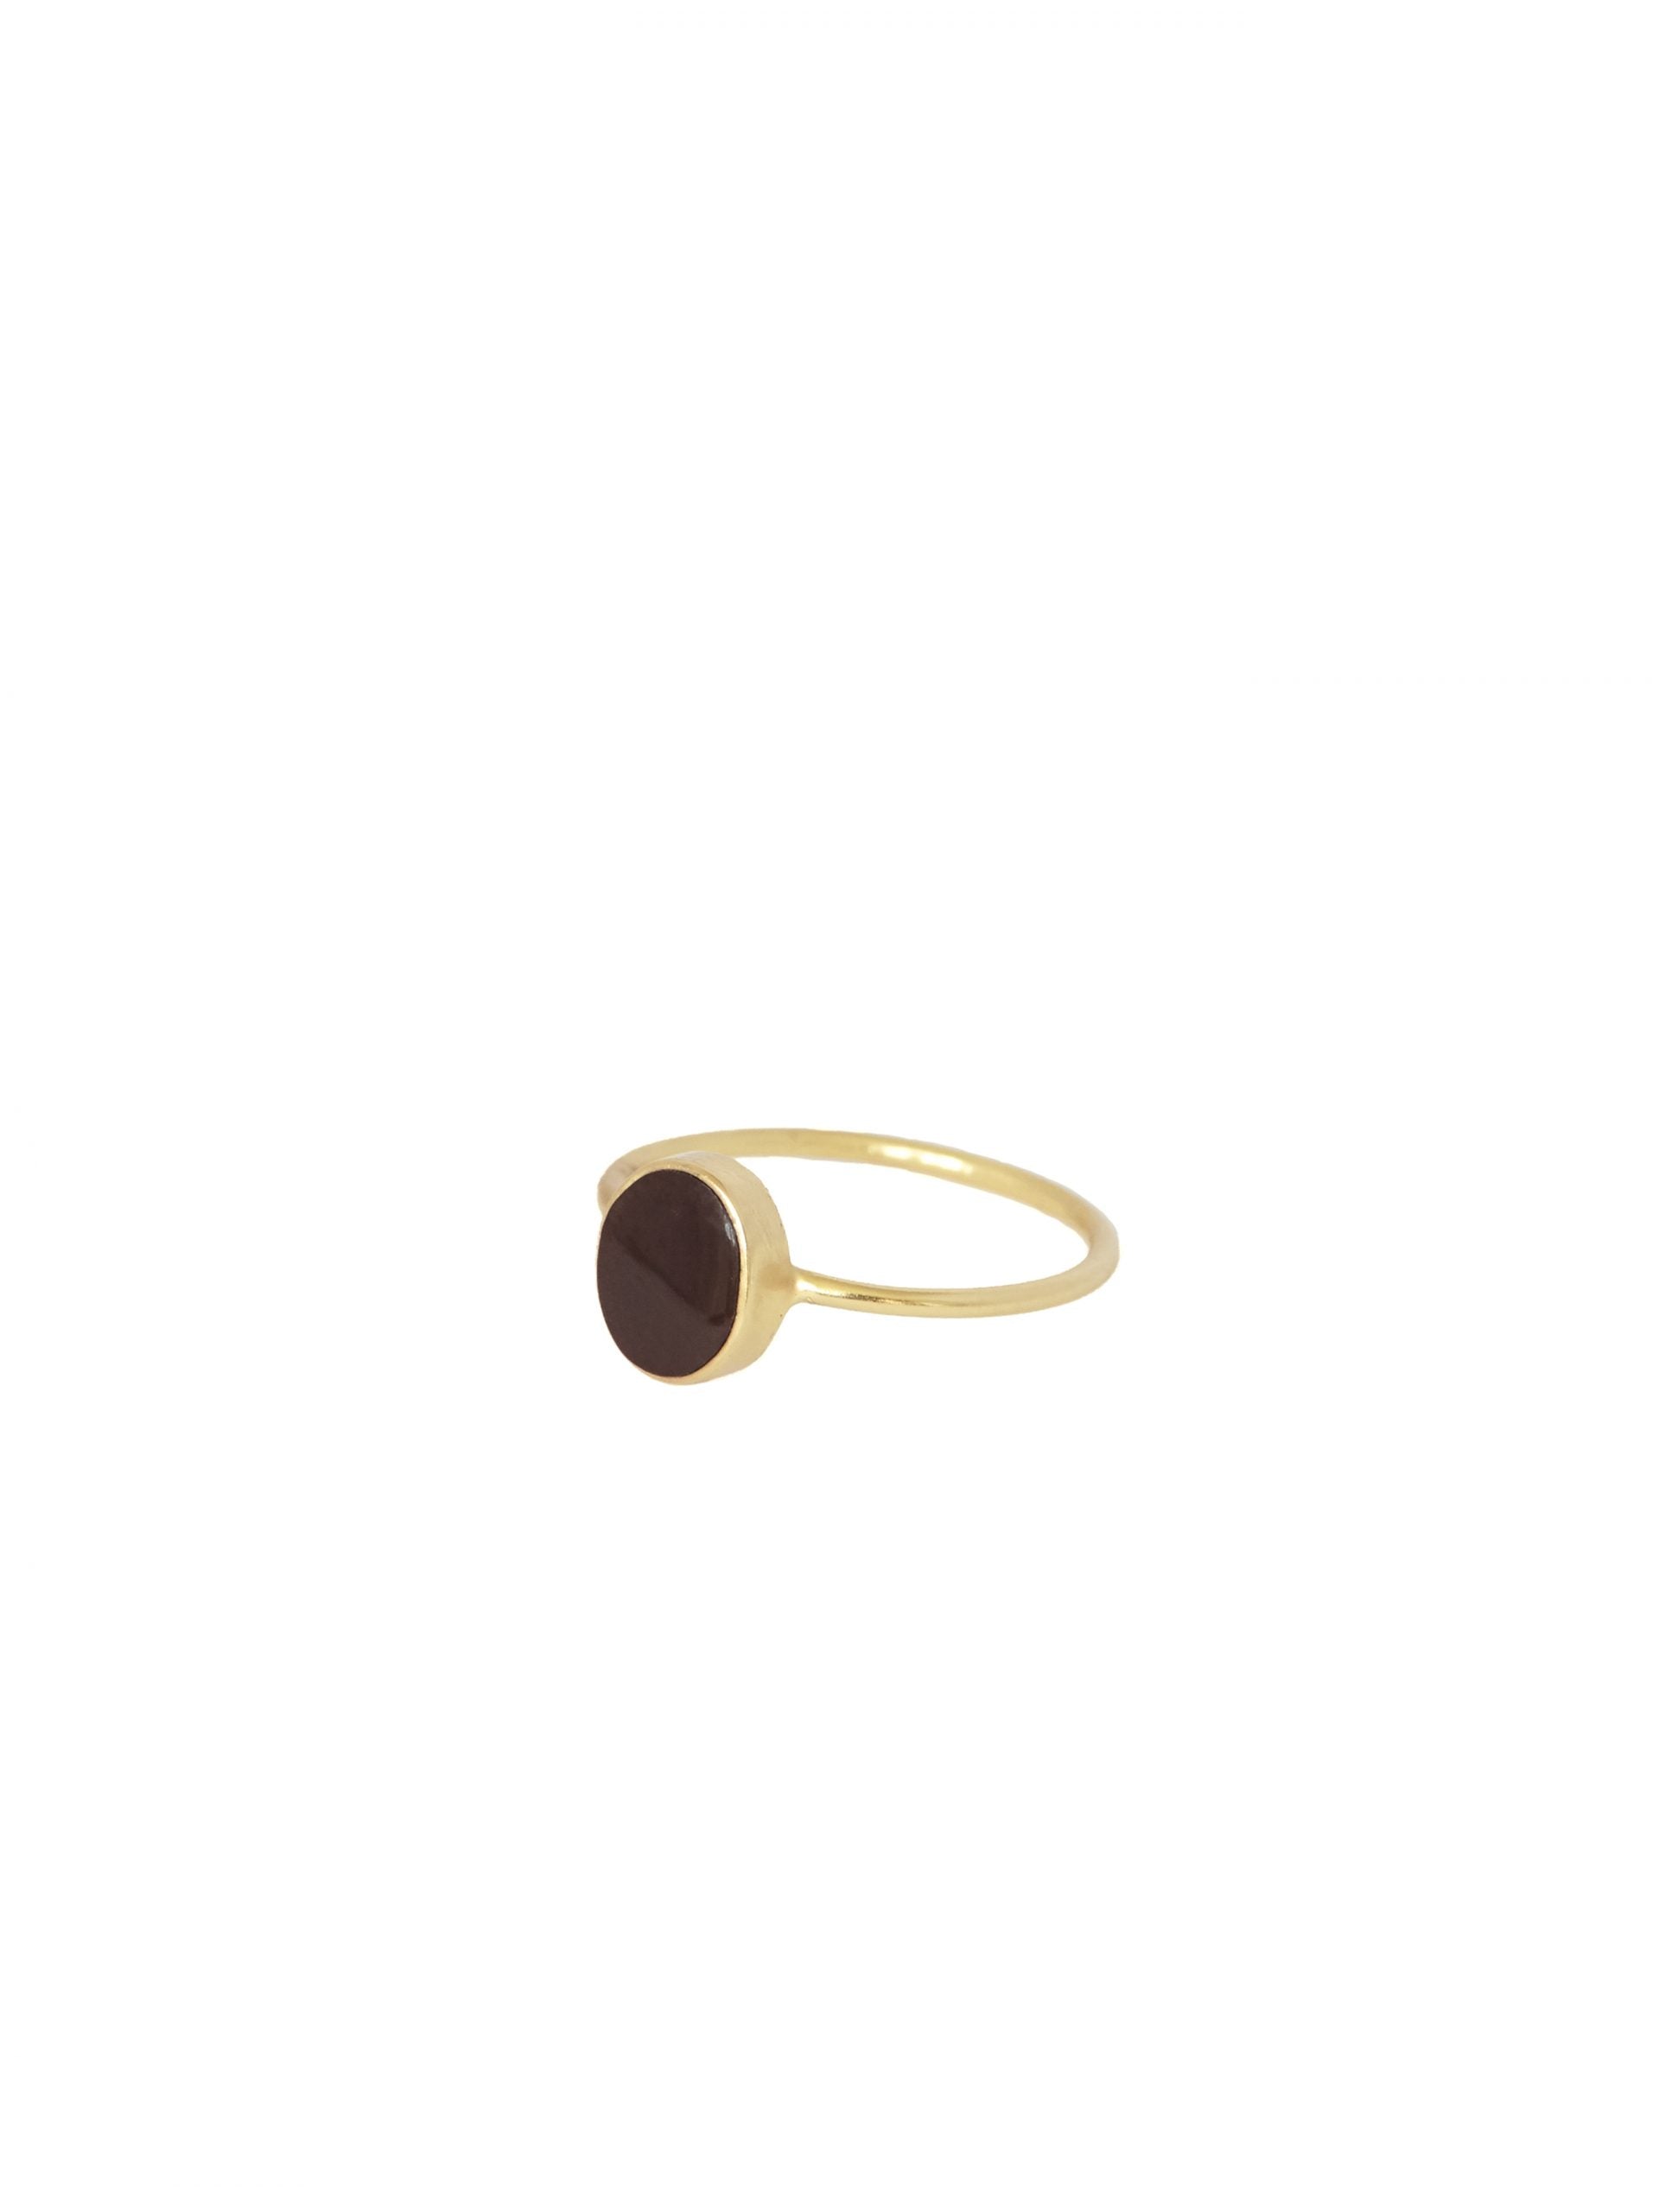 Petite Oval Bordeaux Ring Gold